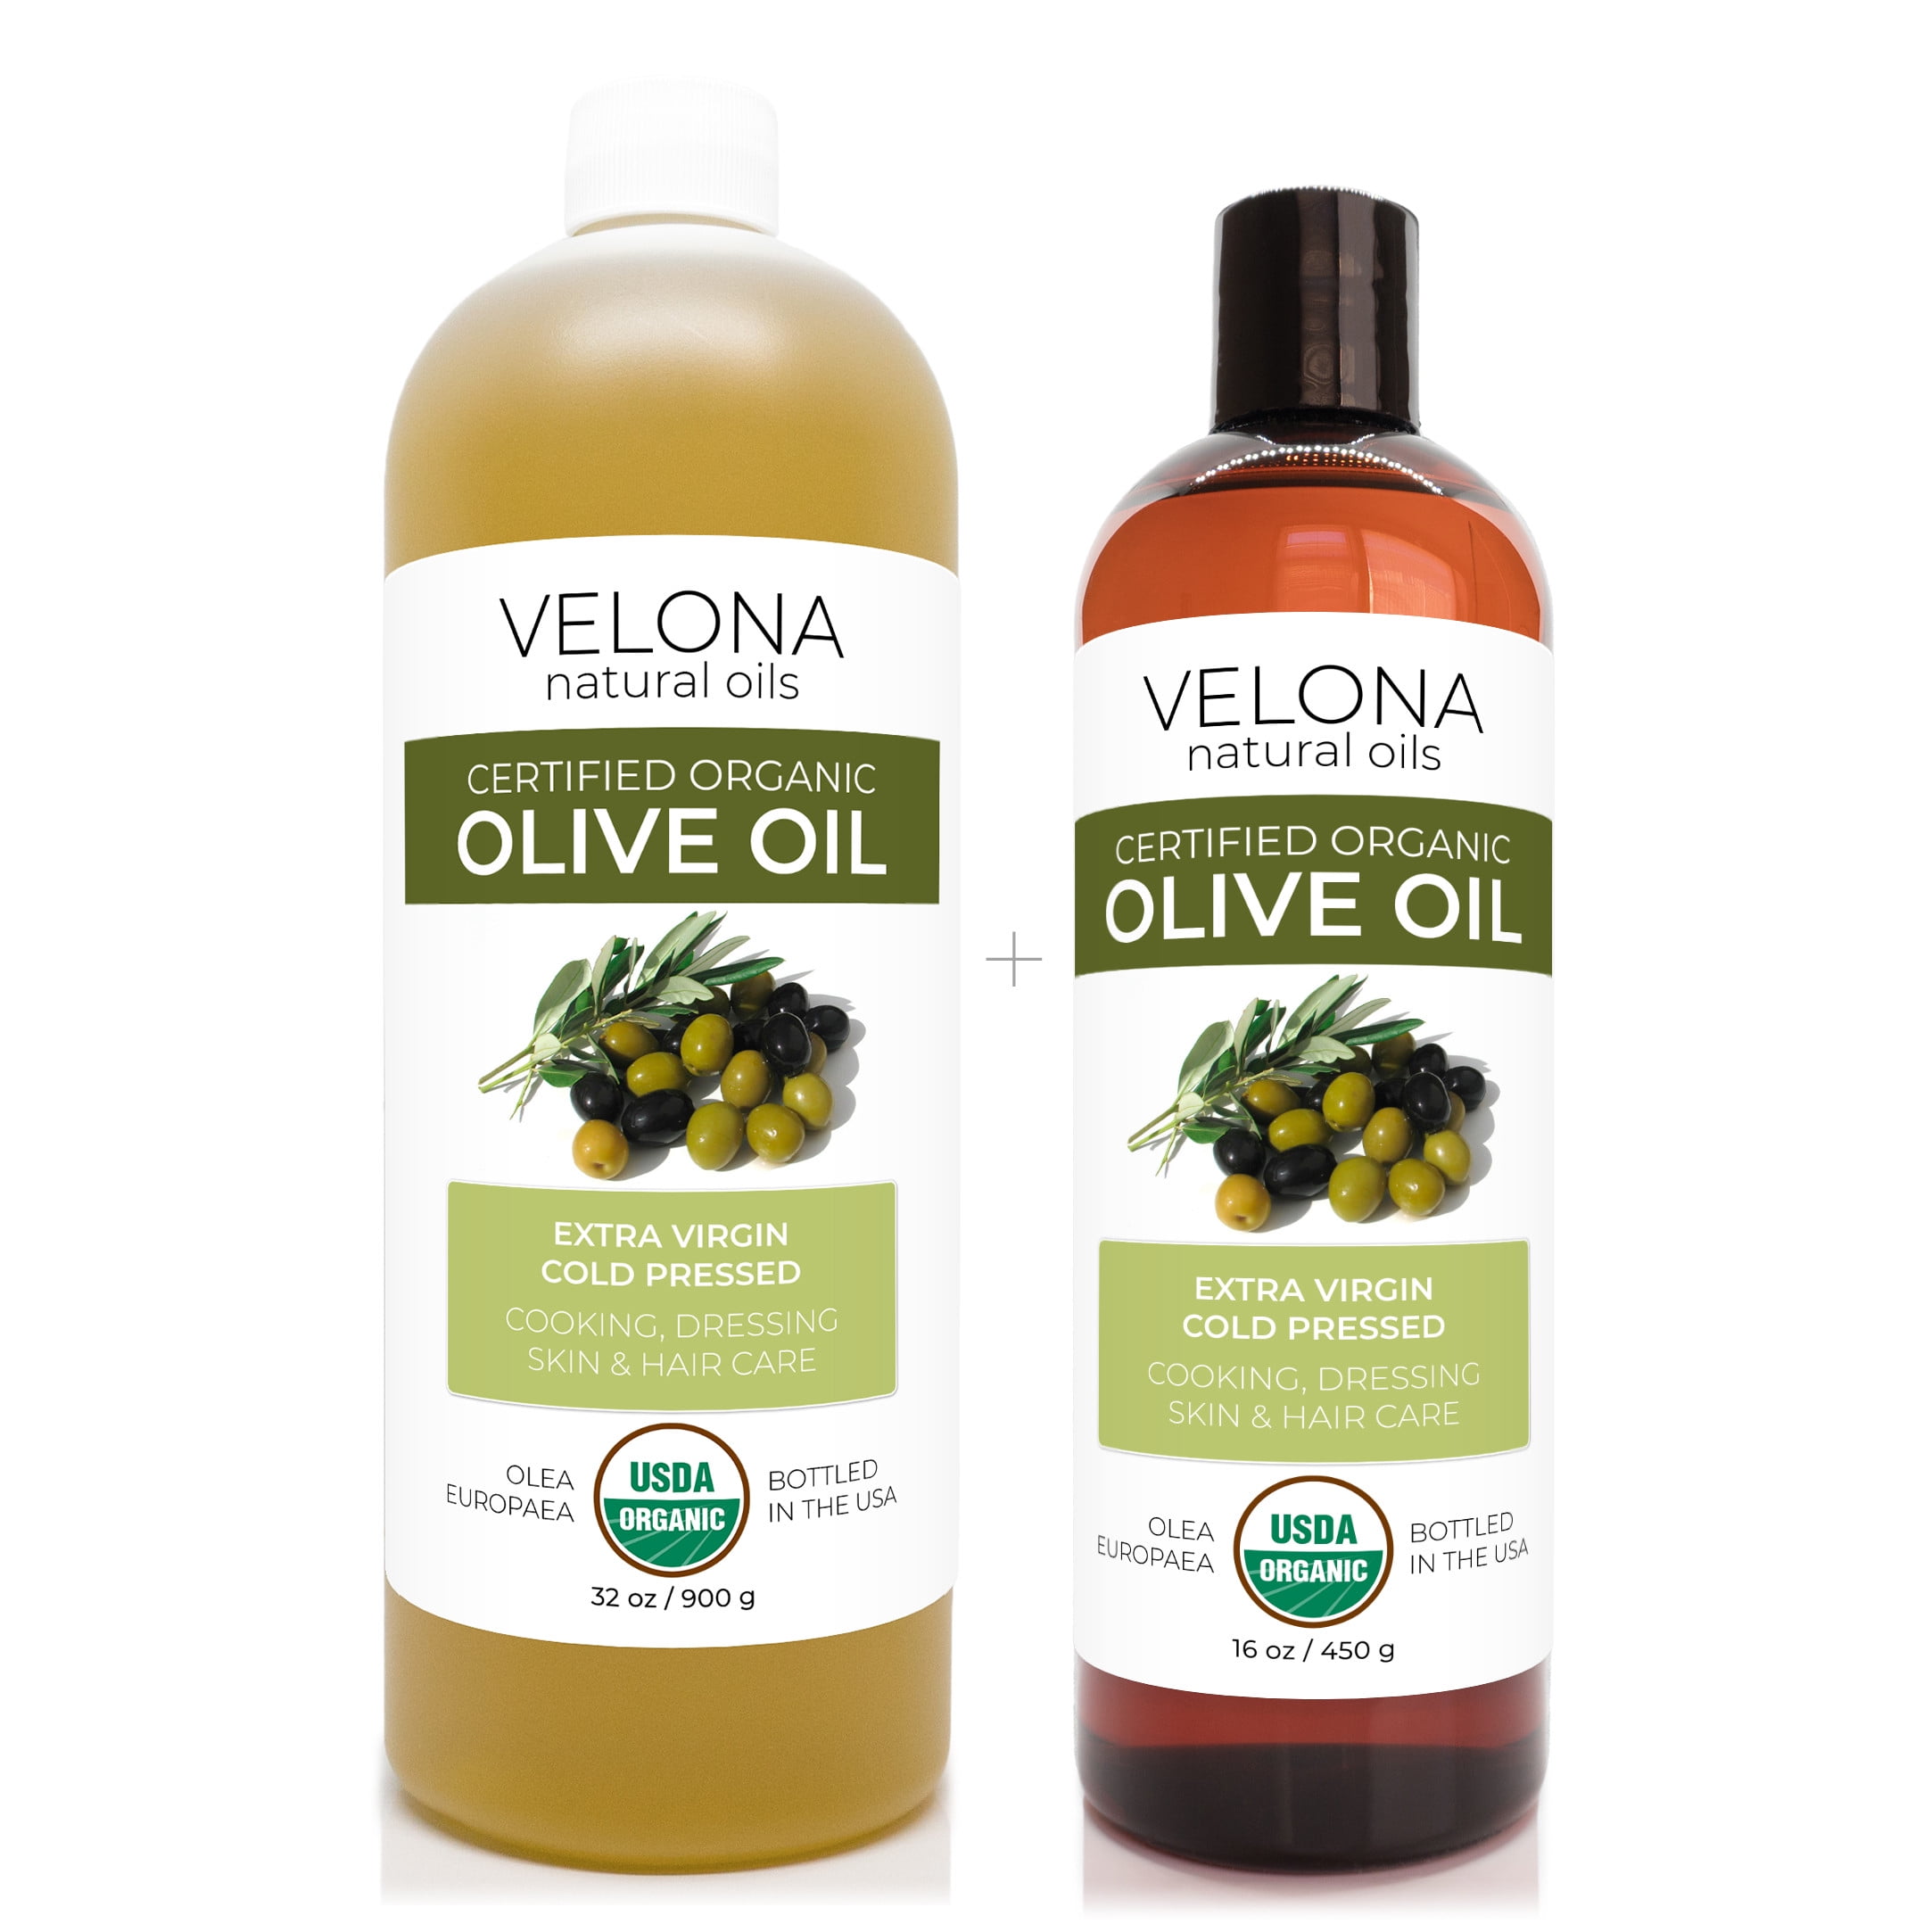 Half-gallon/Gallon (64-128 oz.) EVOO 2022 — Bella Vista Organic